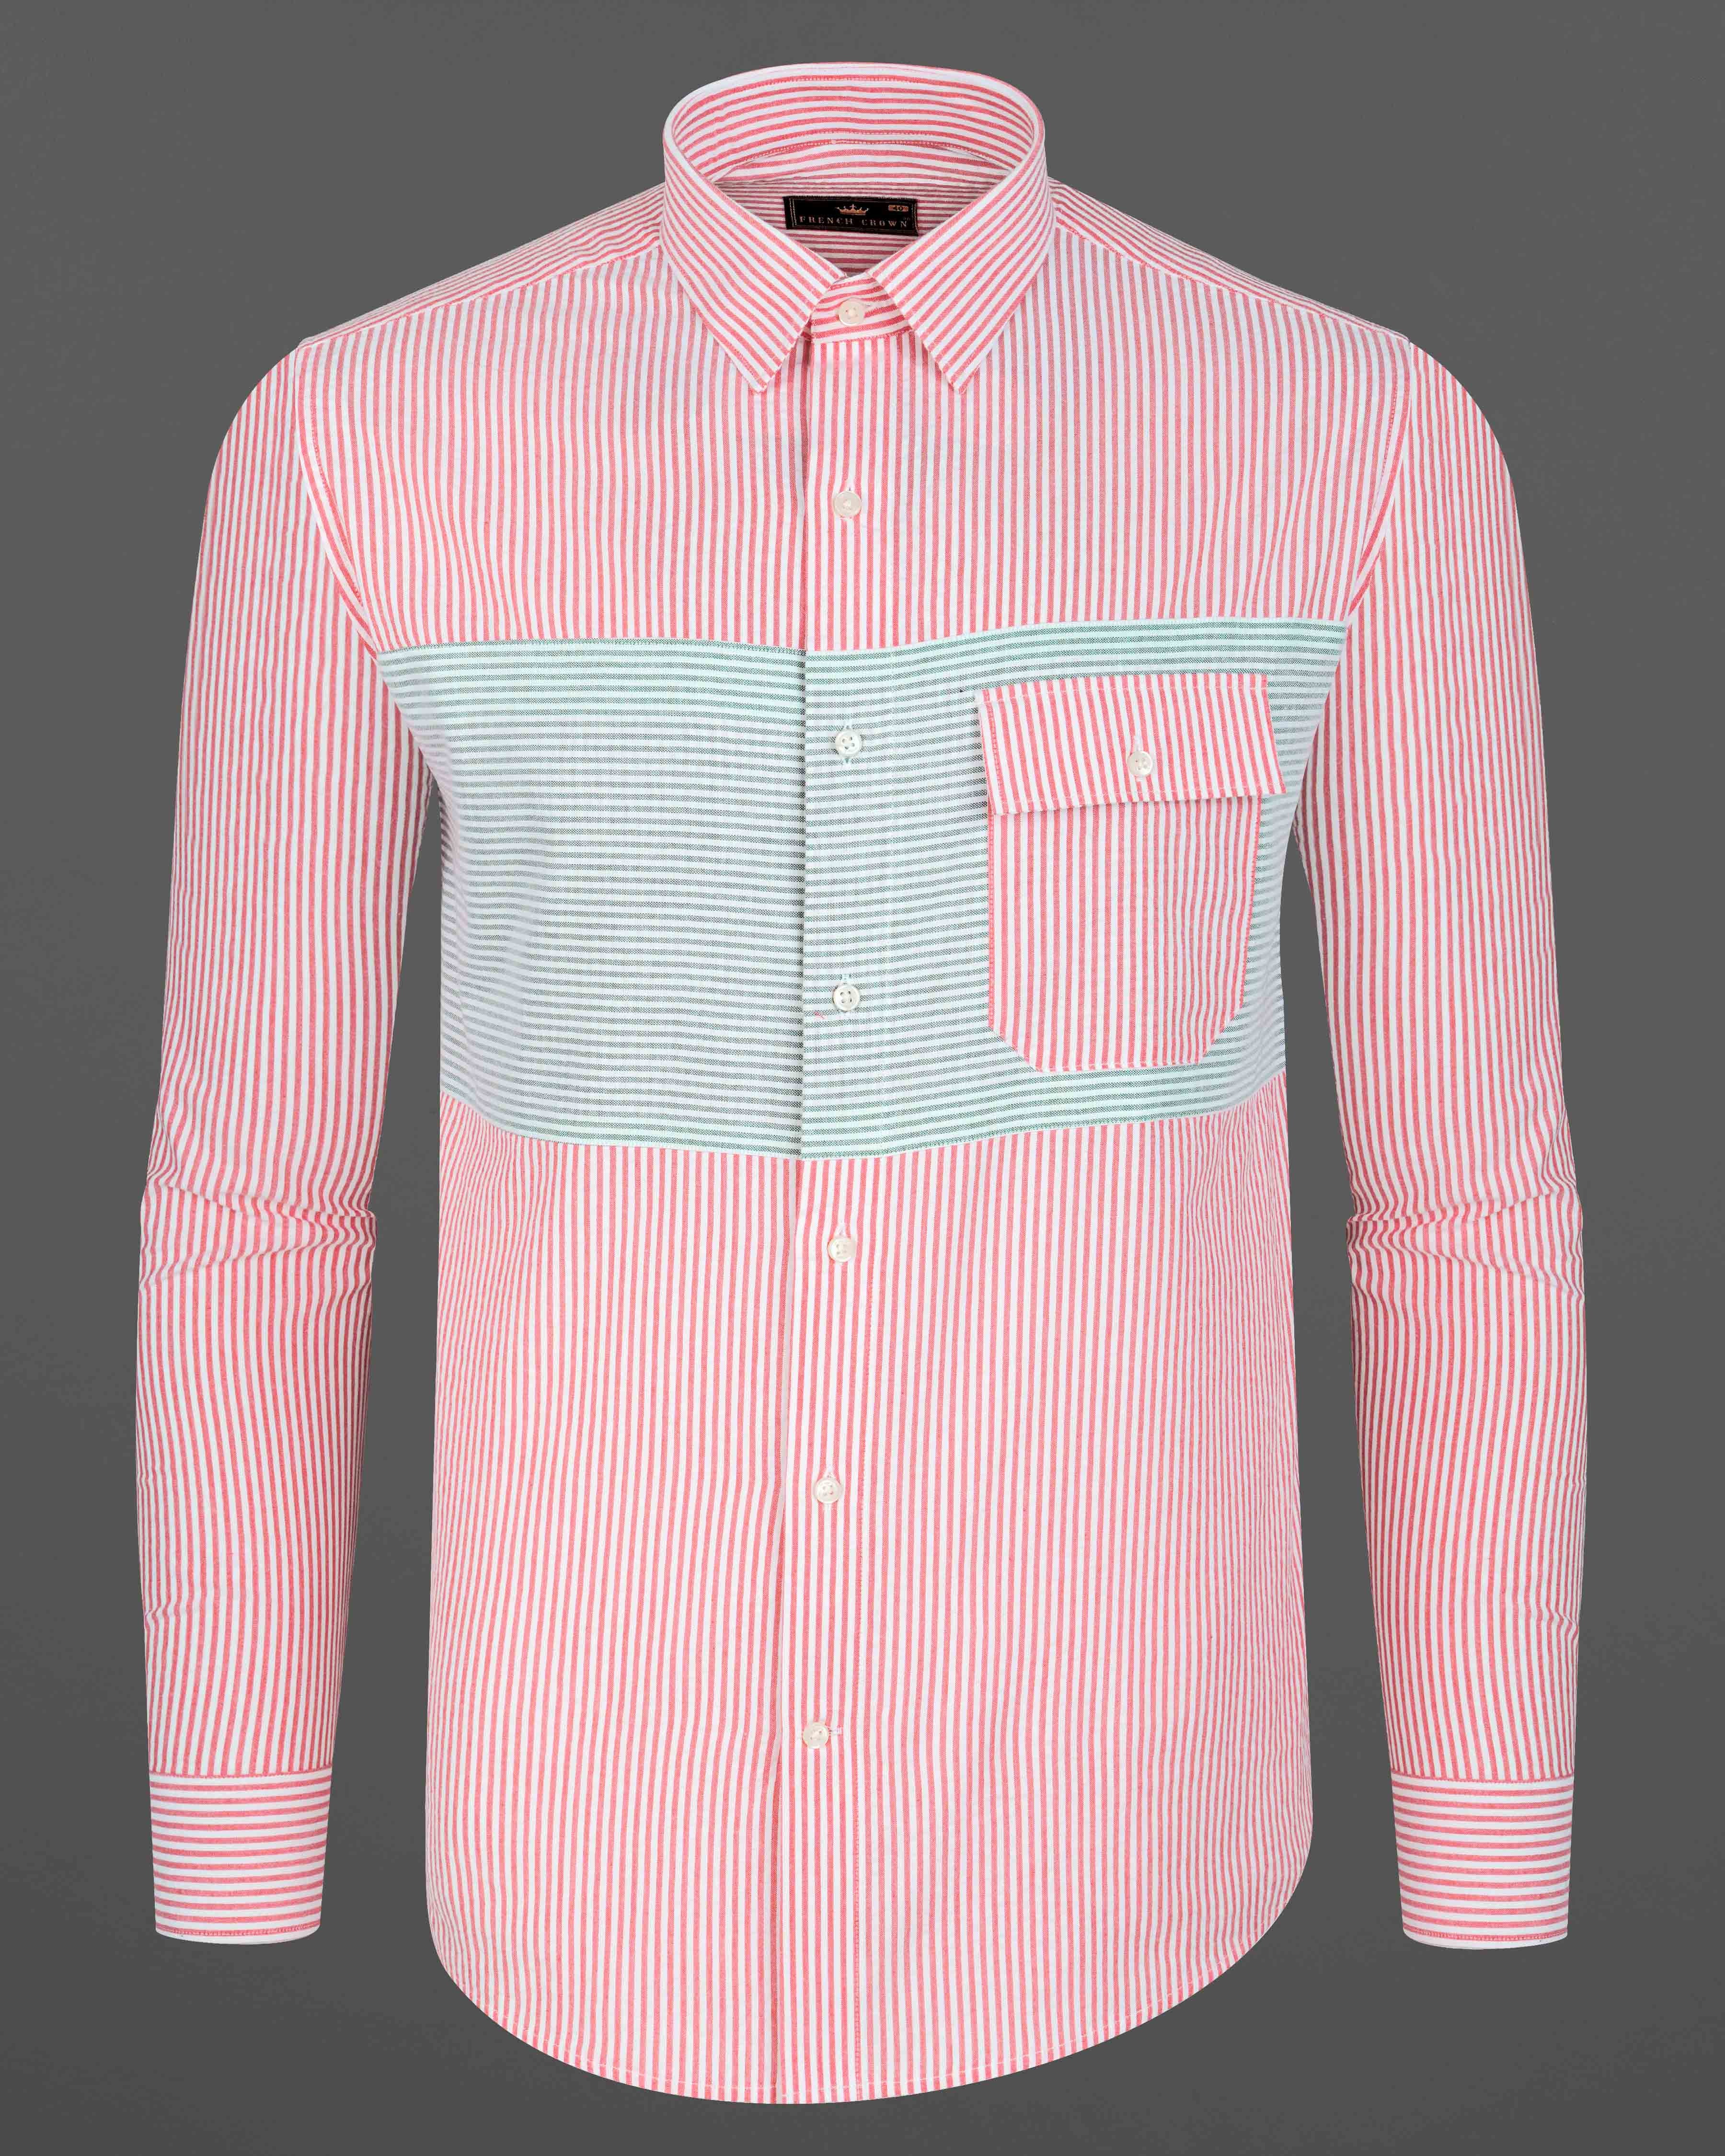 Carmine Pink with Cascade Green Striped Seersucker Giza Cotton Designer Shirt 8143-P108-38, 8143-P108-H-38, 8143-P108-39, 8143-P108-H-39, 8143-P108-40, 8143-P108-H-40, 8143-P108-42, 8143-P108-H-42, 8143-P108-44, 8143-P108-H-44, 8143-P108-46, 8143-P108-H-46, 8143-P108-48, 8143-P108-H-48, 8143-P108-50, 8143-P108-H-50, 8143-P108-52, 8143-P108-H-52 